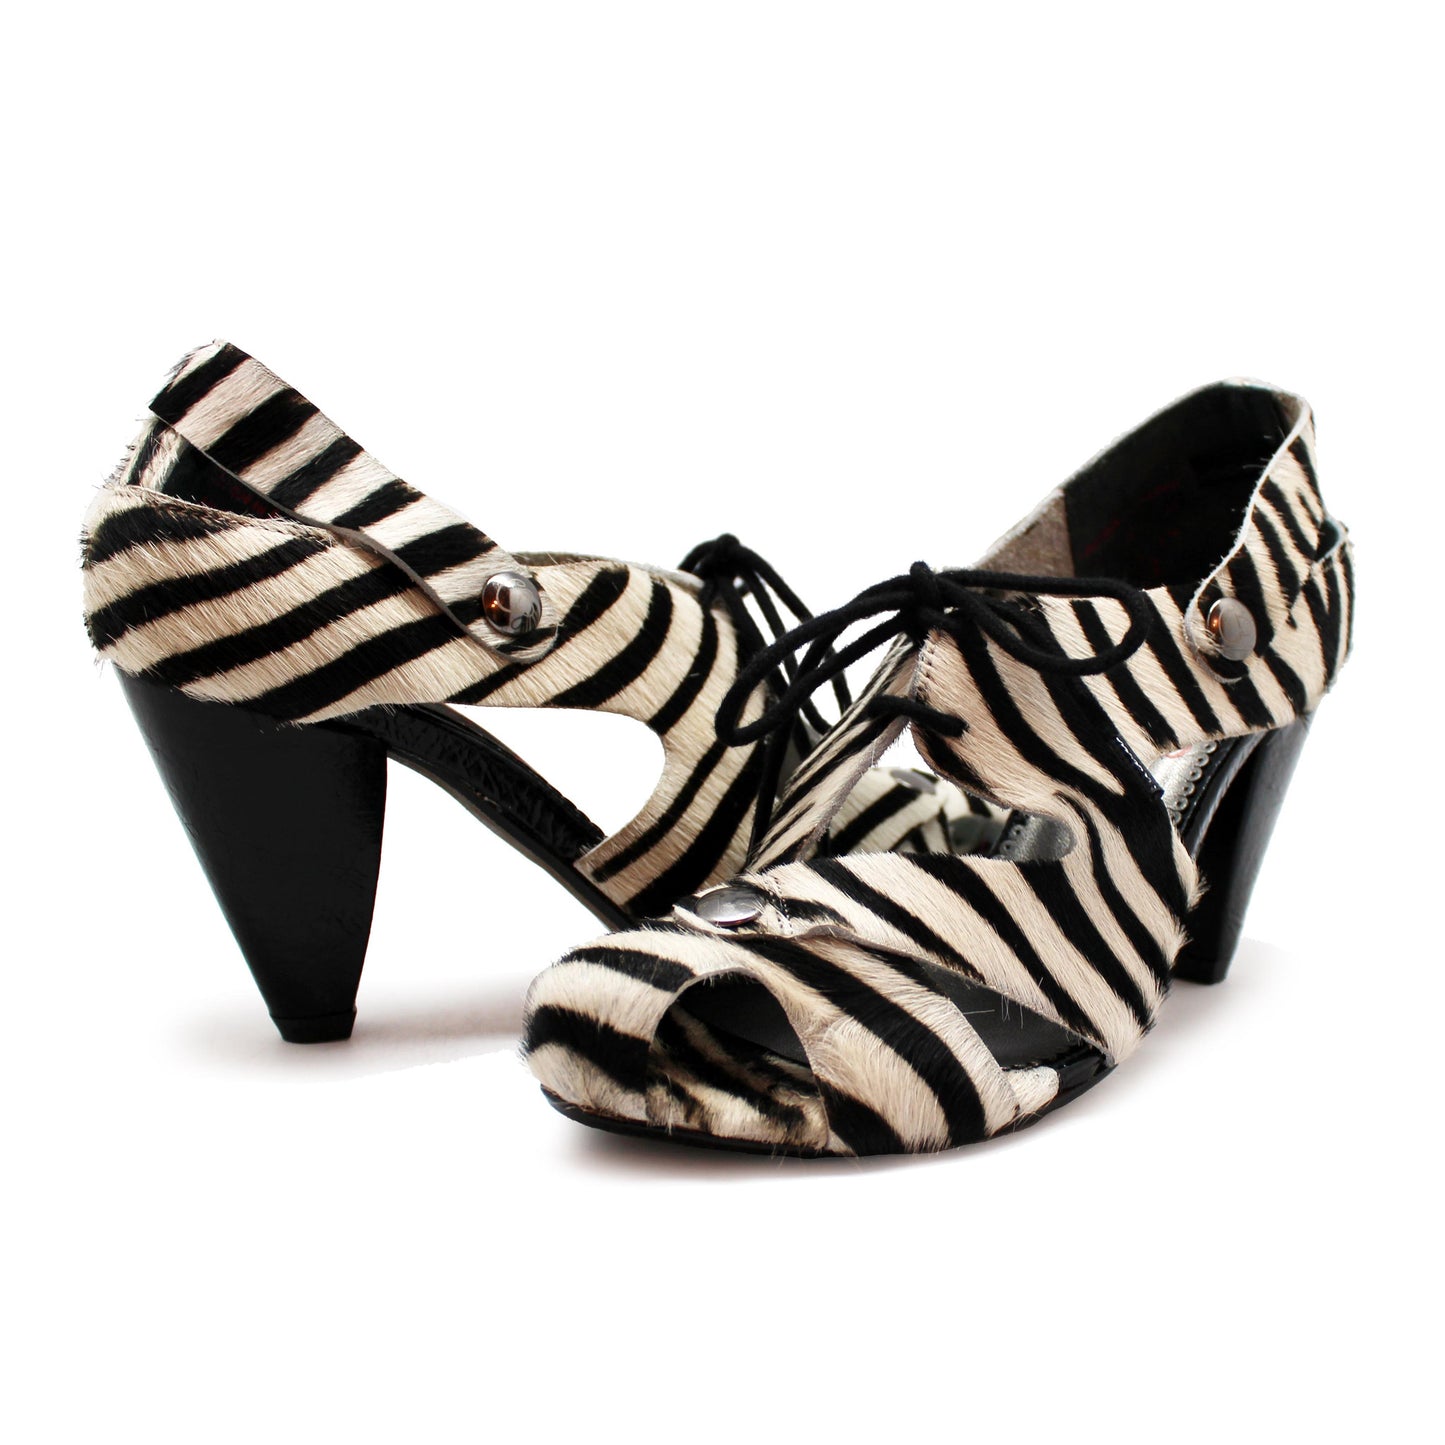 Coco - Zebra black and white sandal